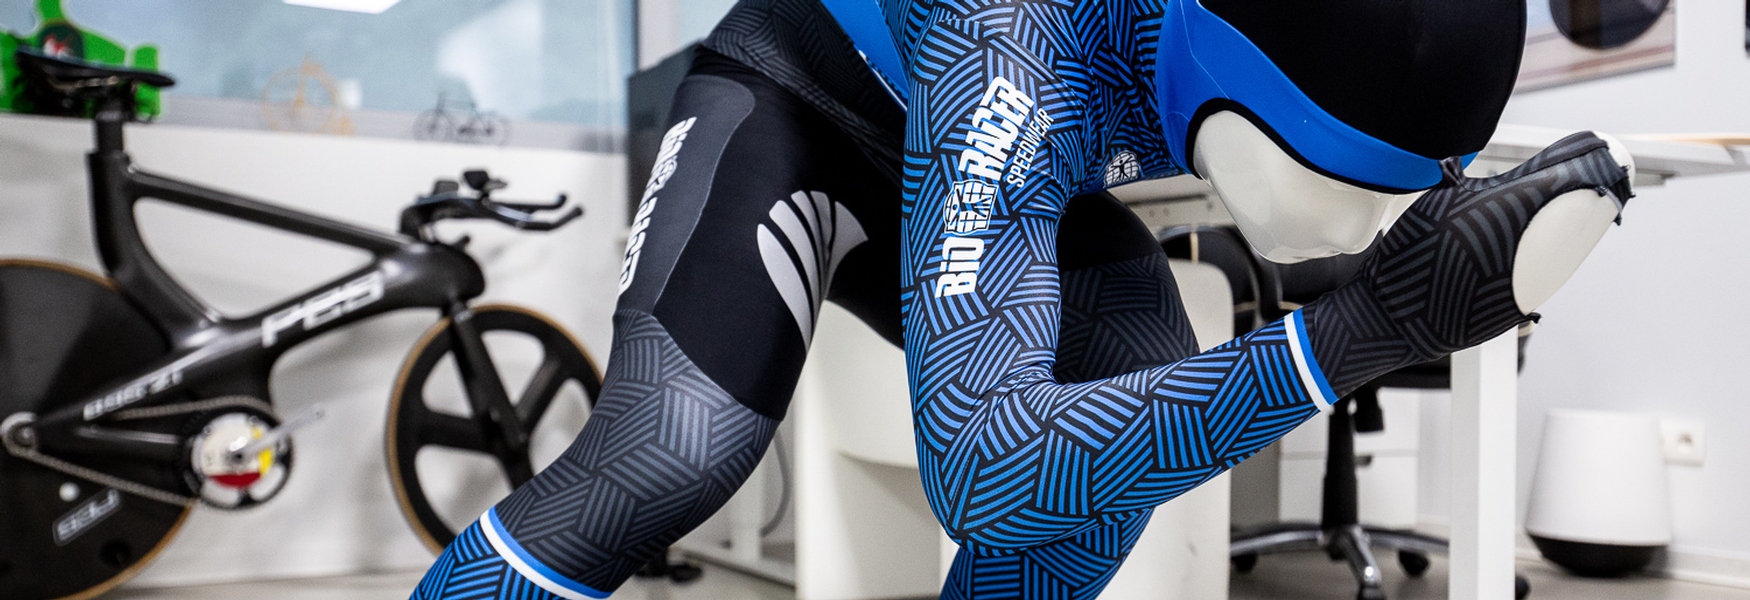 Unisex Colombia Olympic team skating suit Size 8 Sleeves Short sleeve arms  Leg sleeve short-leg